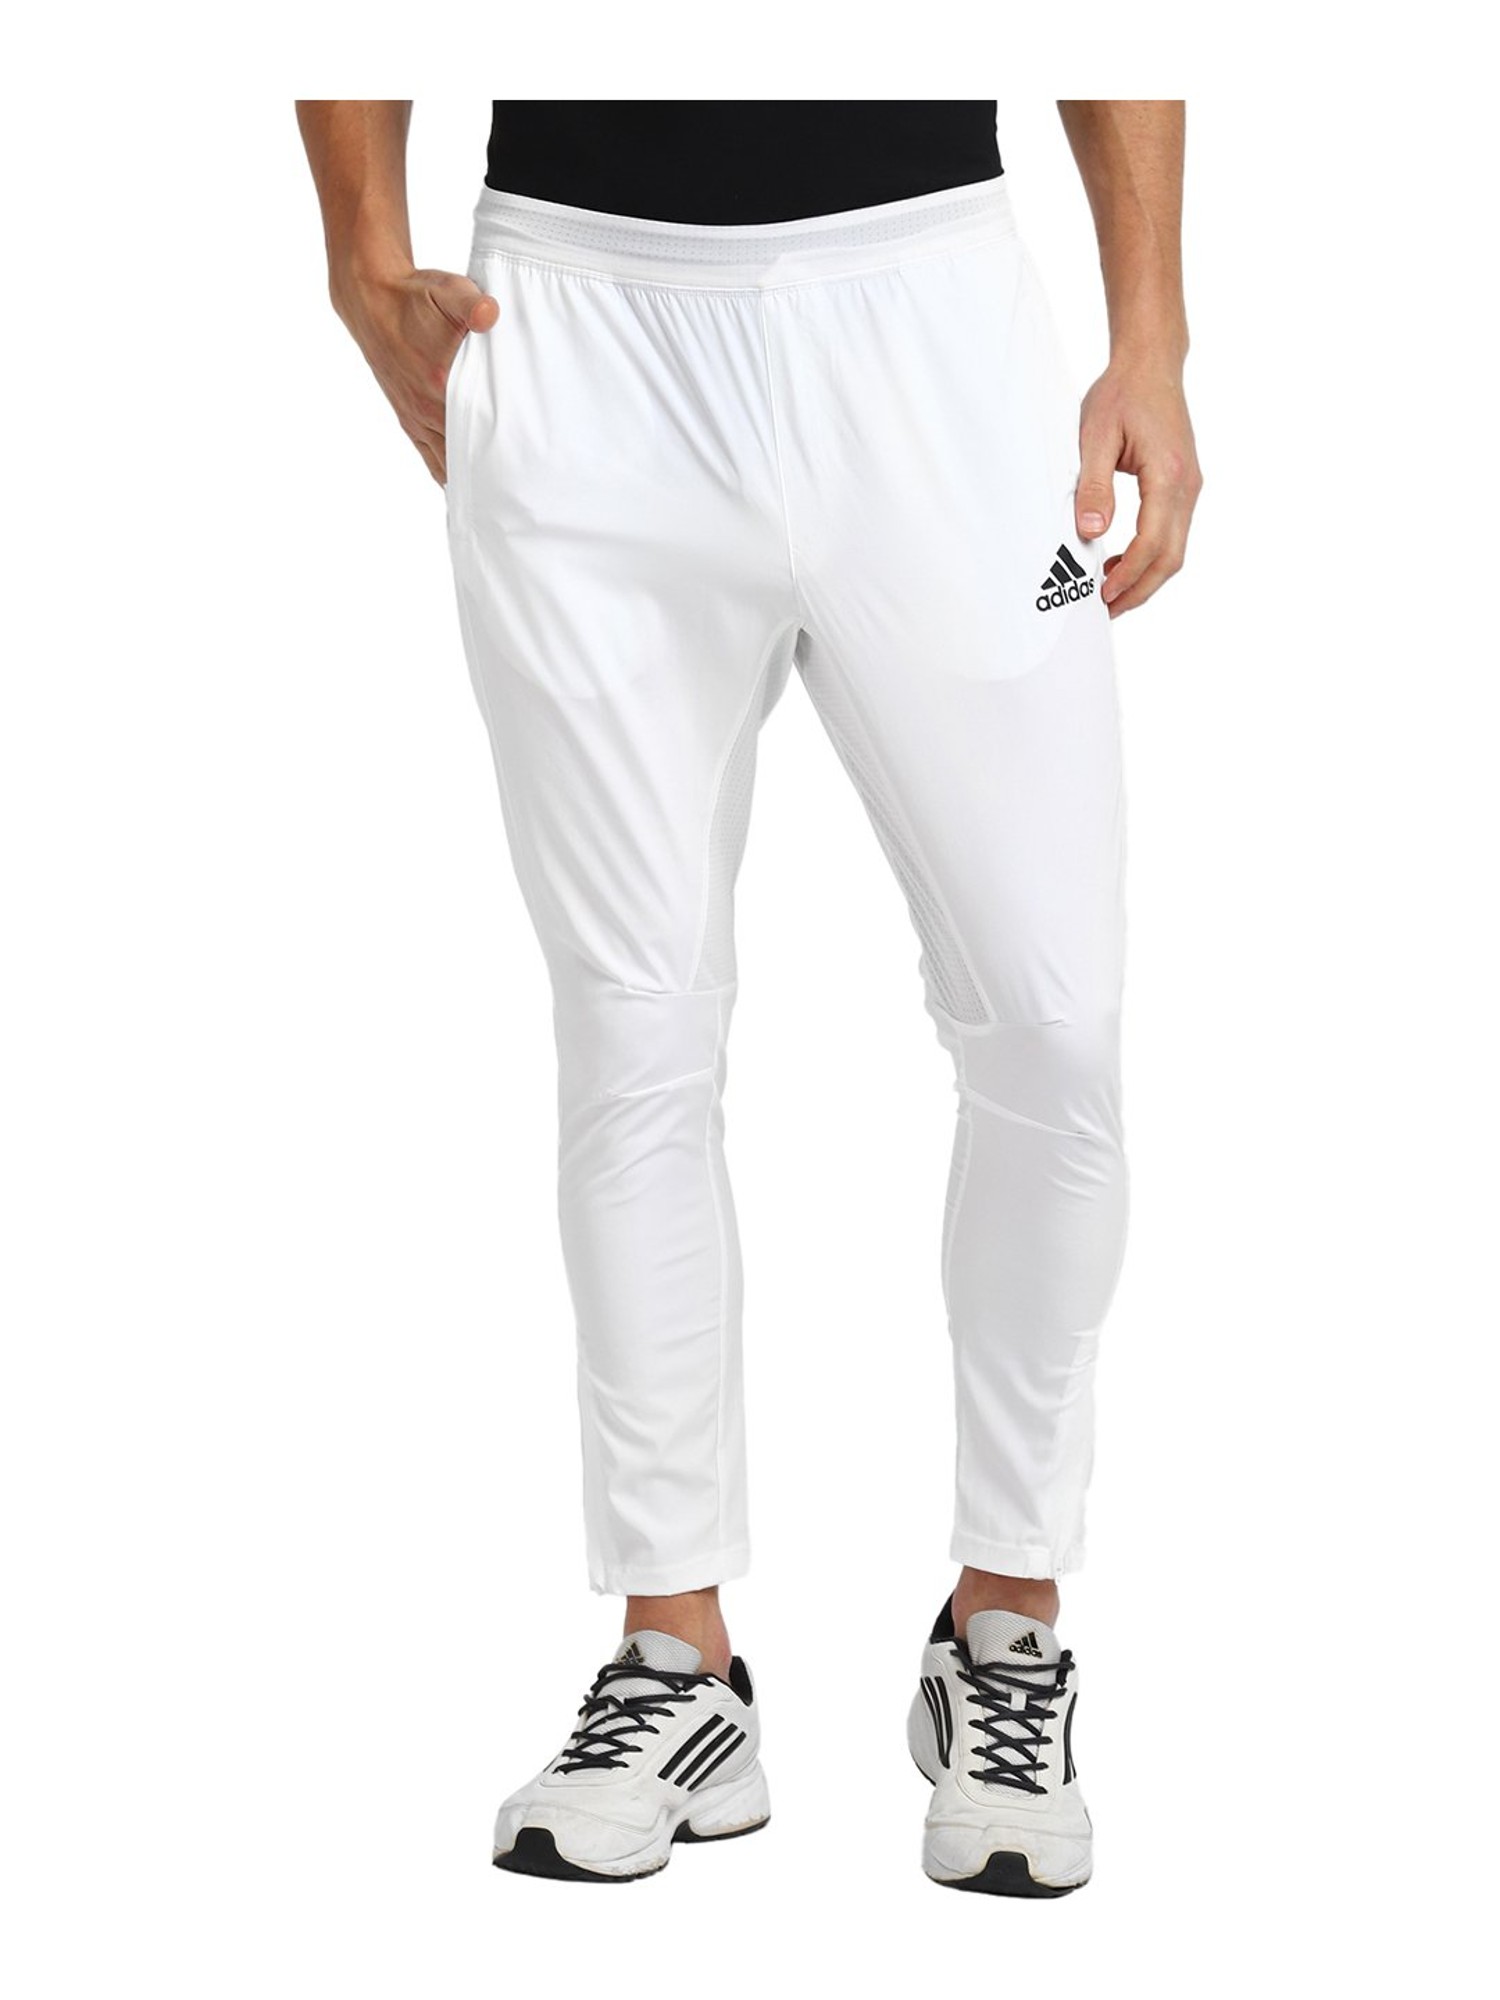 Noah White Adidas Originals Edition Painter Trousers  Lyst UK